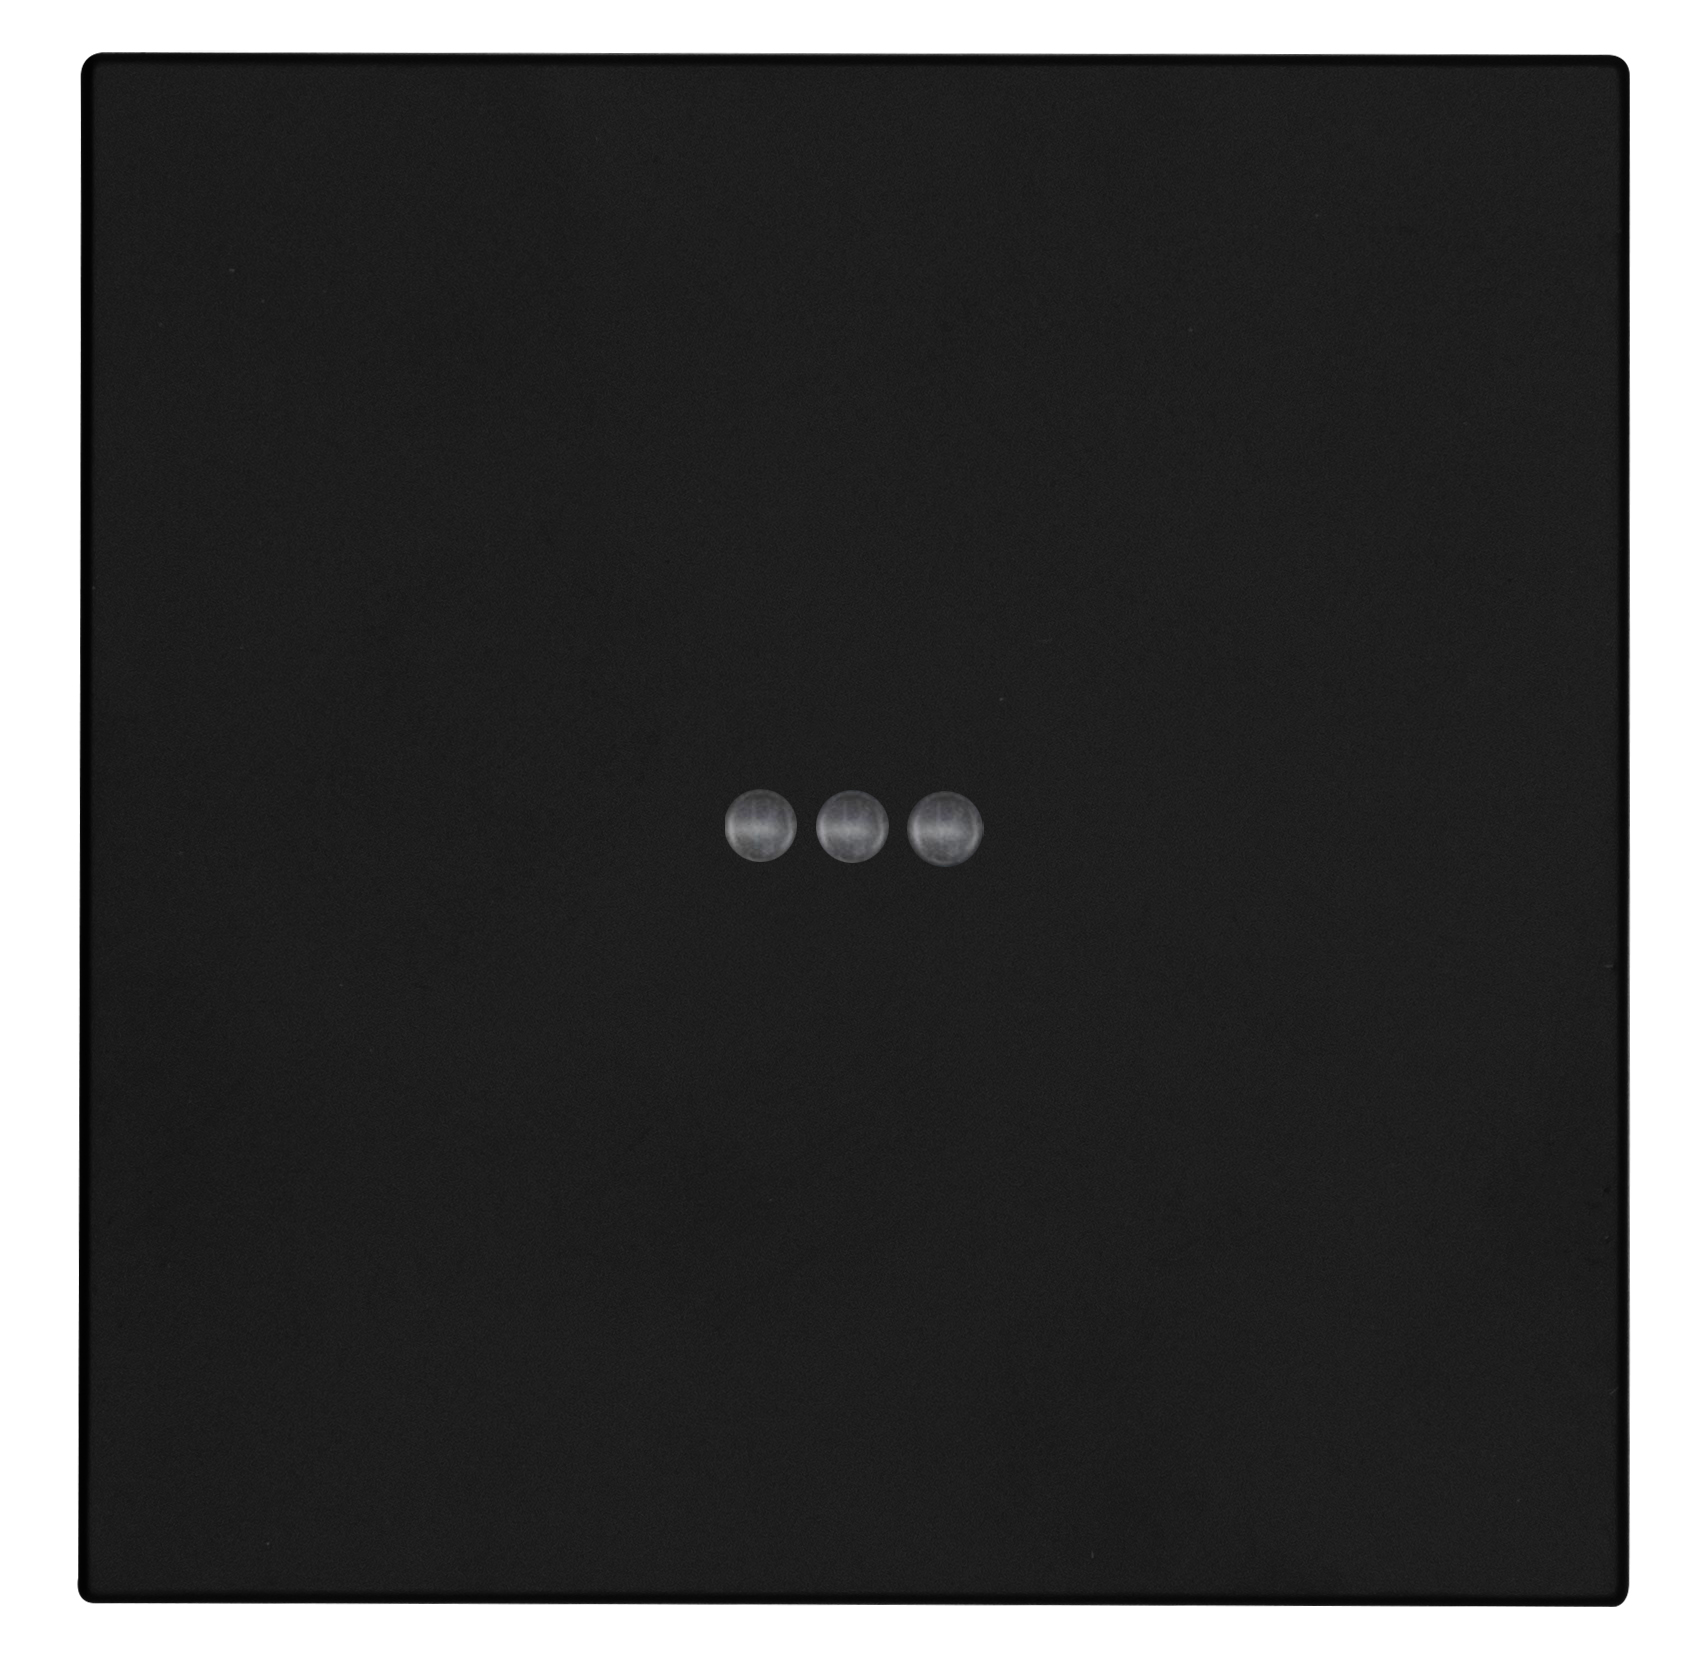 OPUS 55 bedieningselement wisselschakelaar met transparante lens matt zwart enkelvoudig